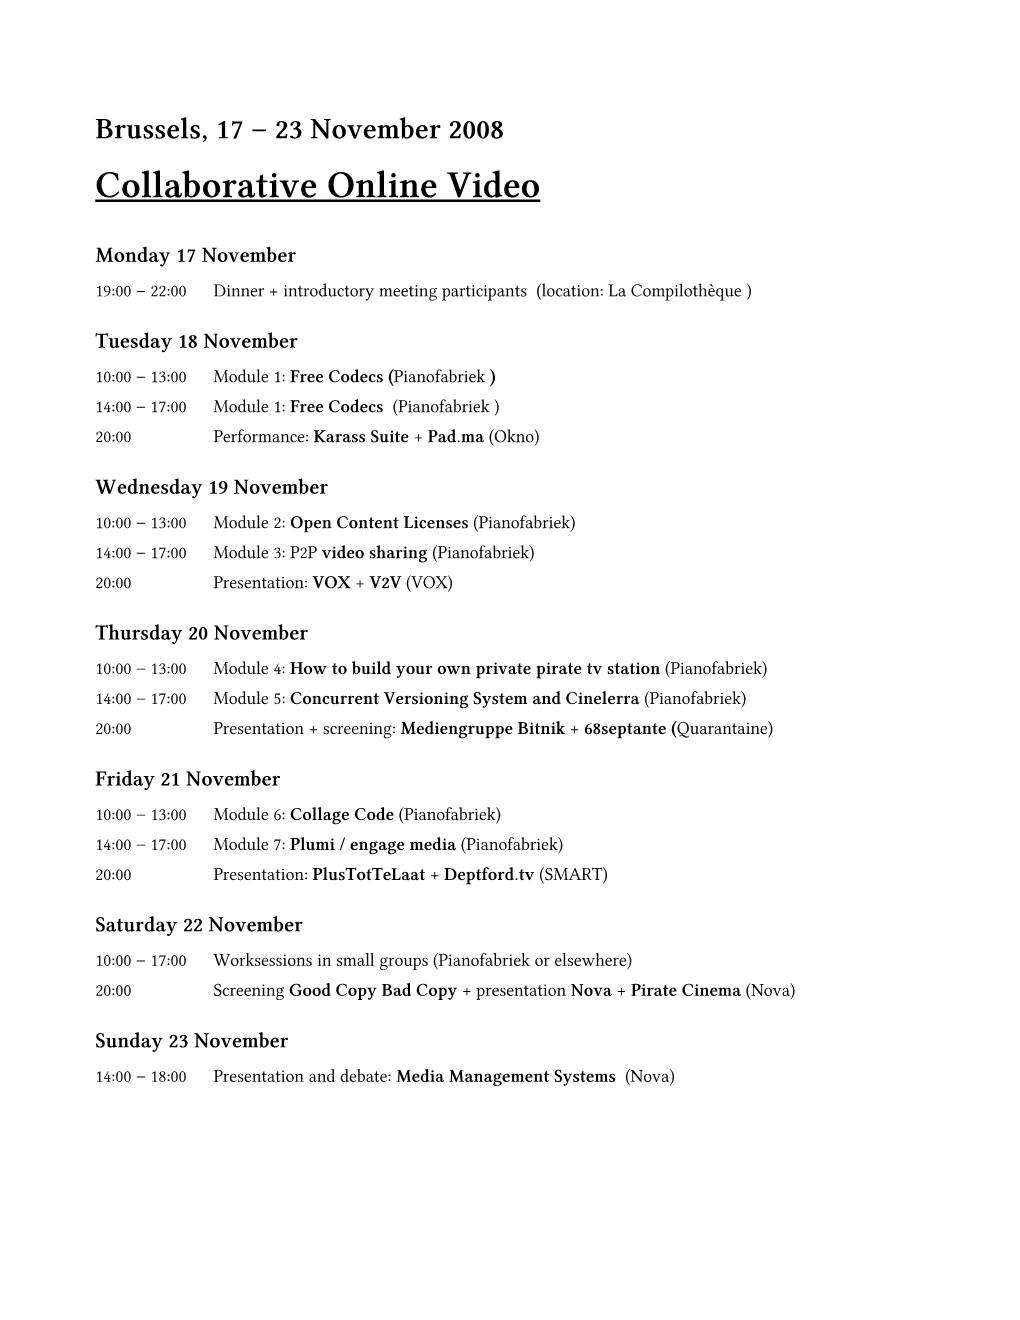 Collaborative Online Video